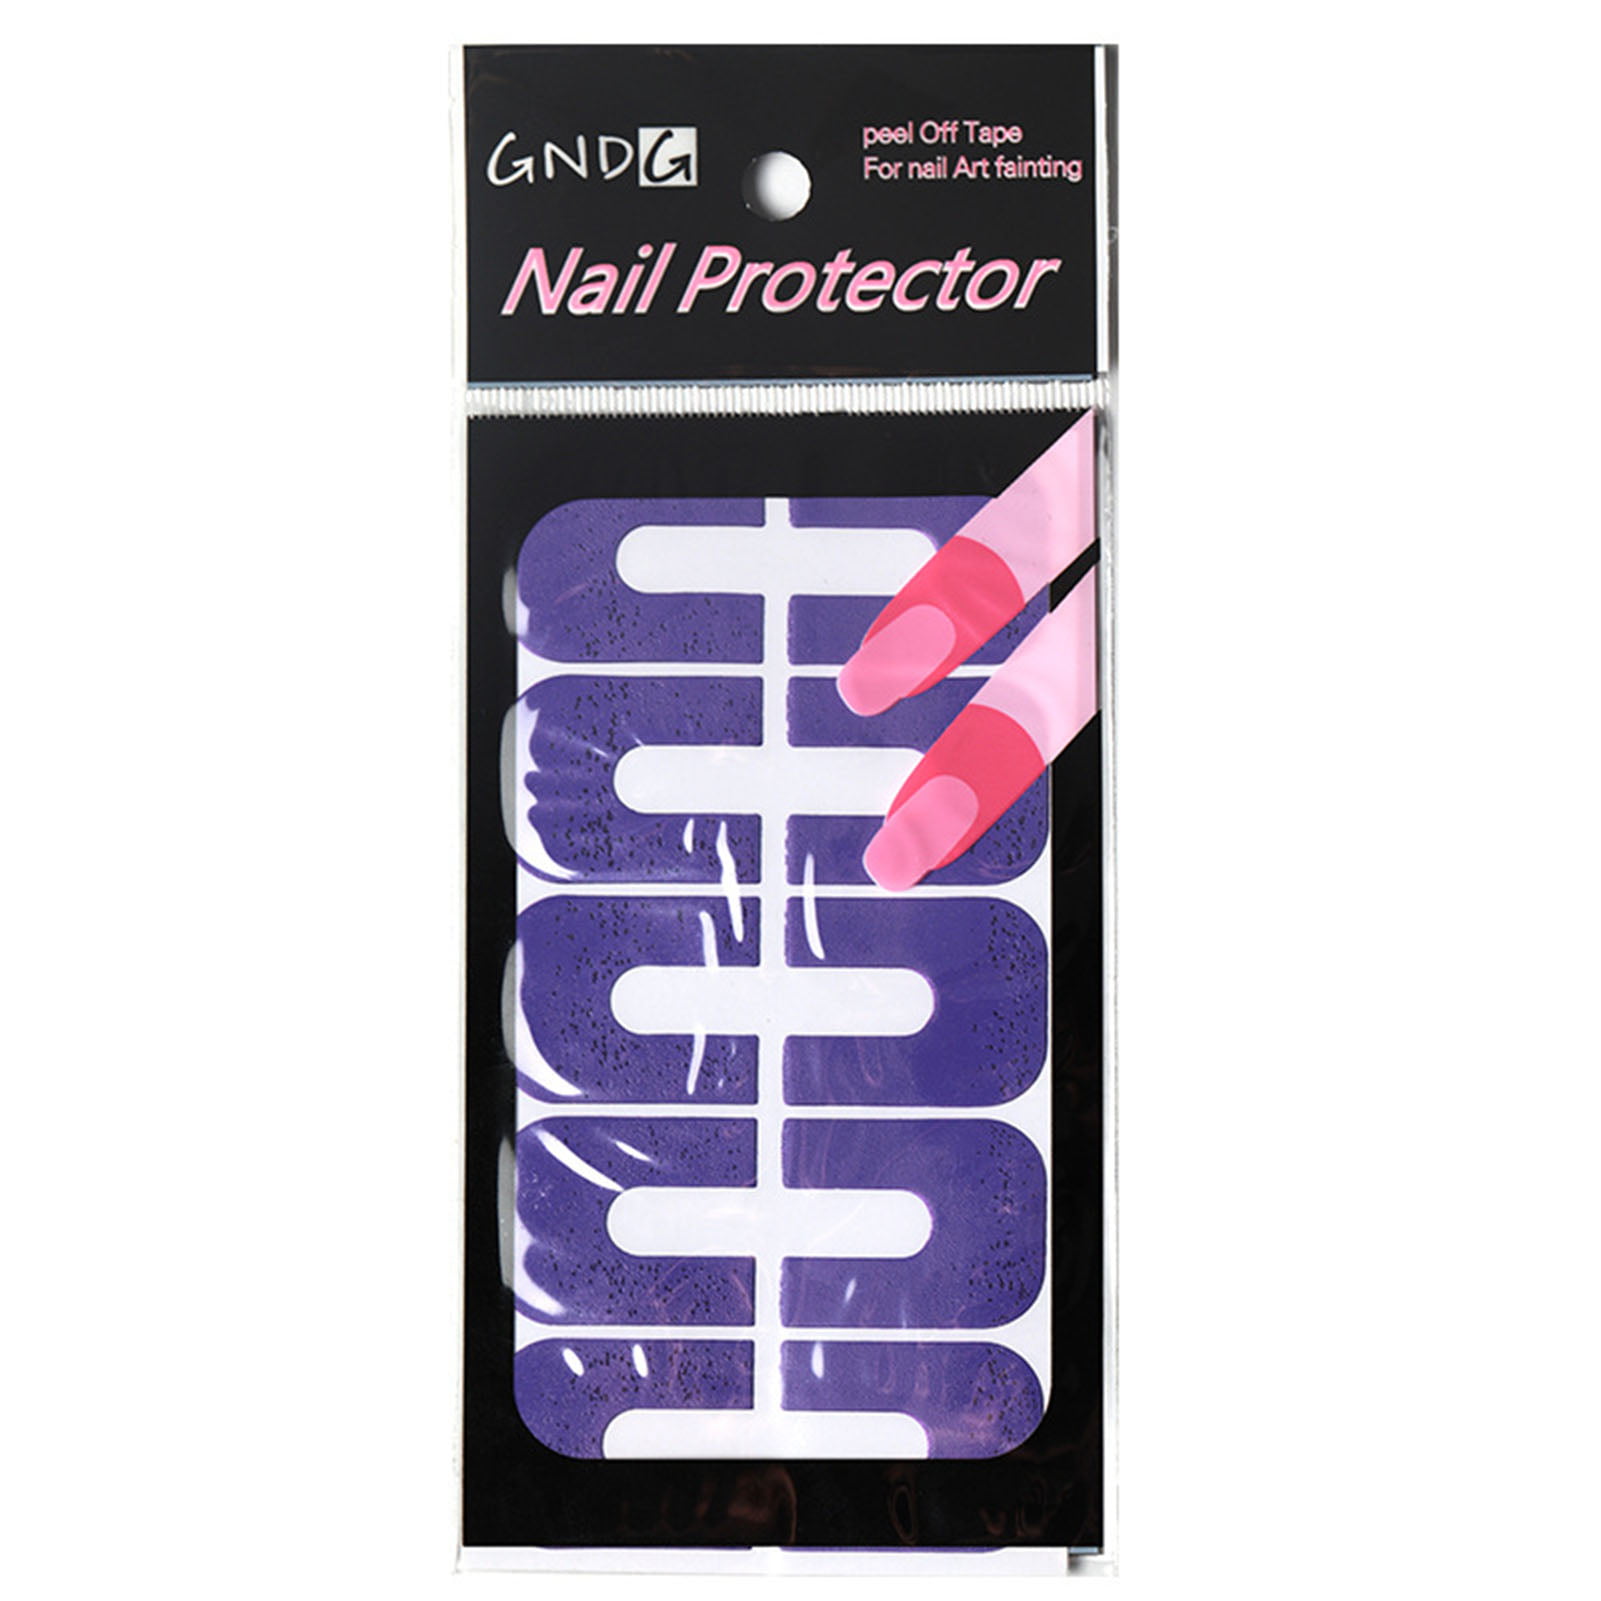 Easy Peel Off Tape For Nails Tape Palisade Skin Guard Protector Nail Art  Polish | eBay